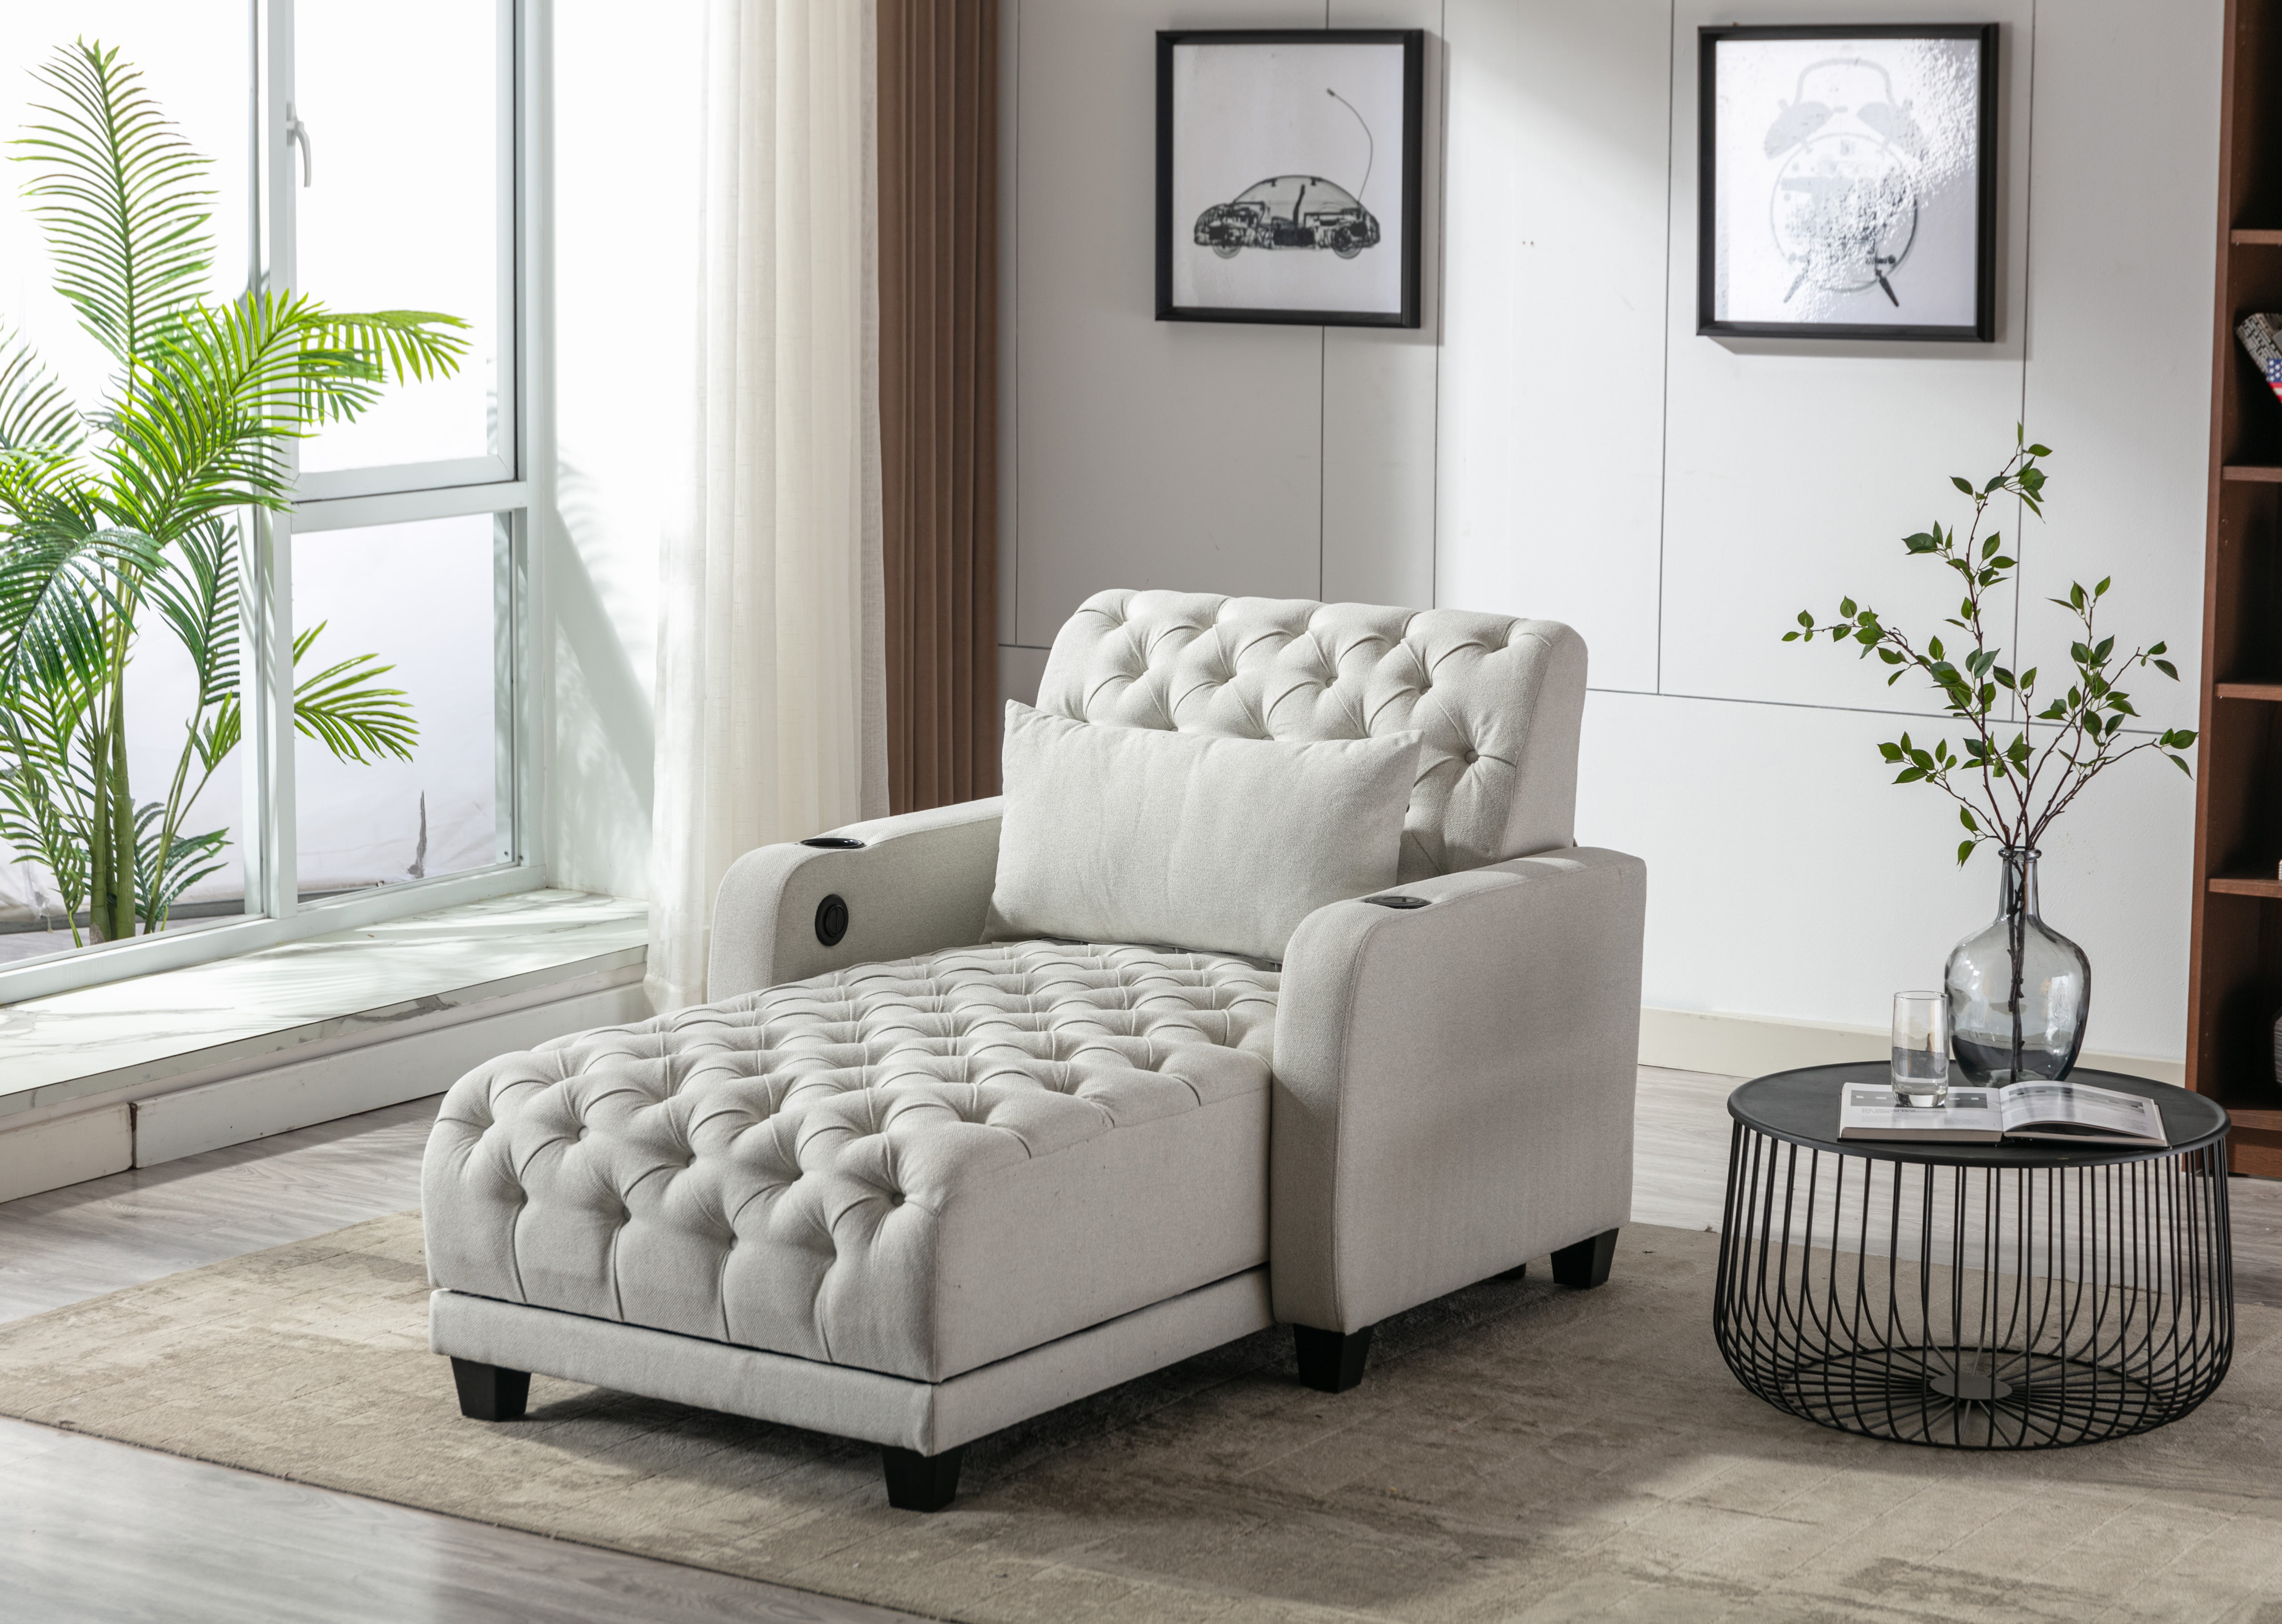 Living Room Sofa Modern On Tufted